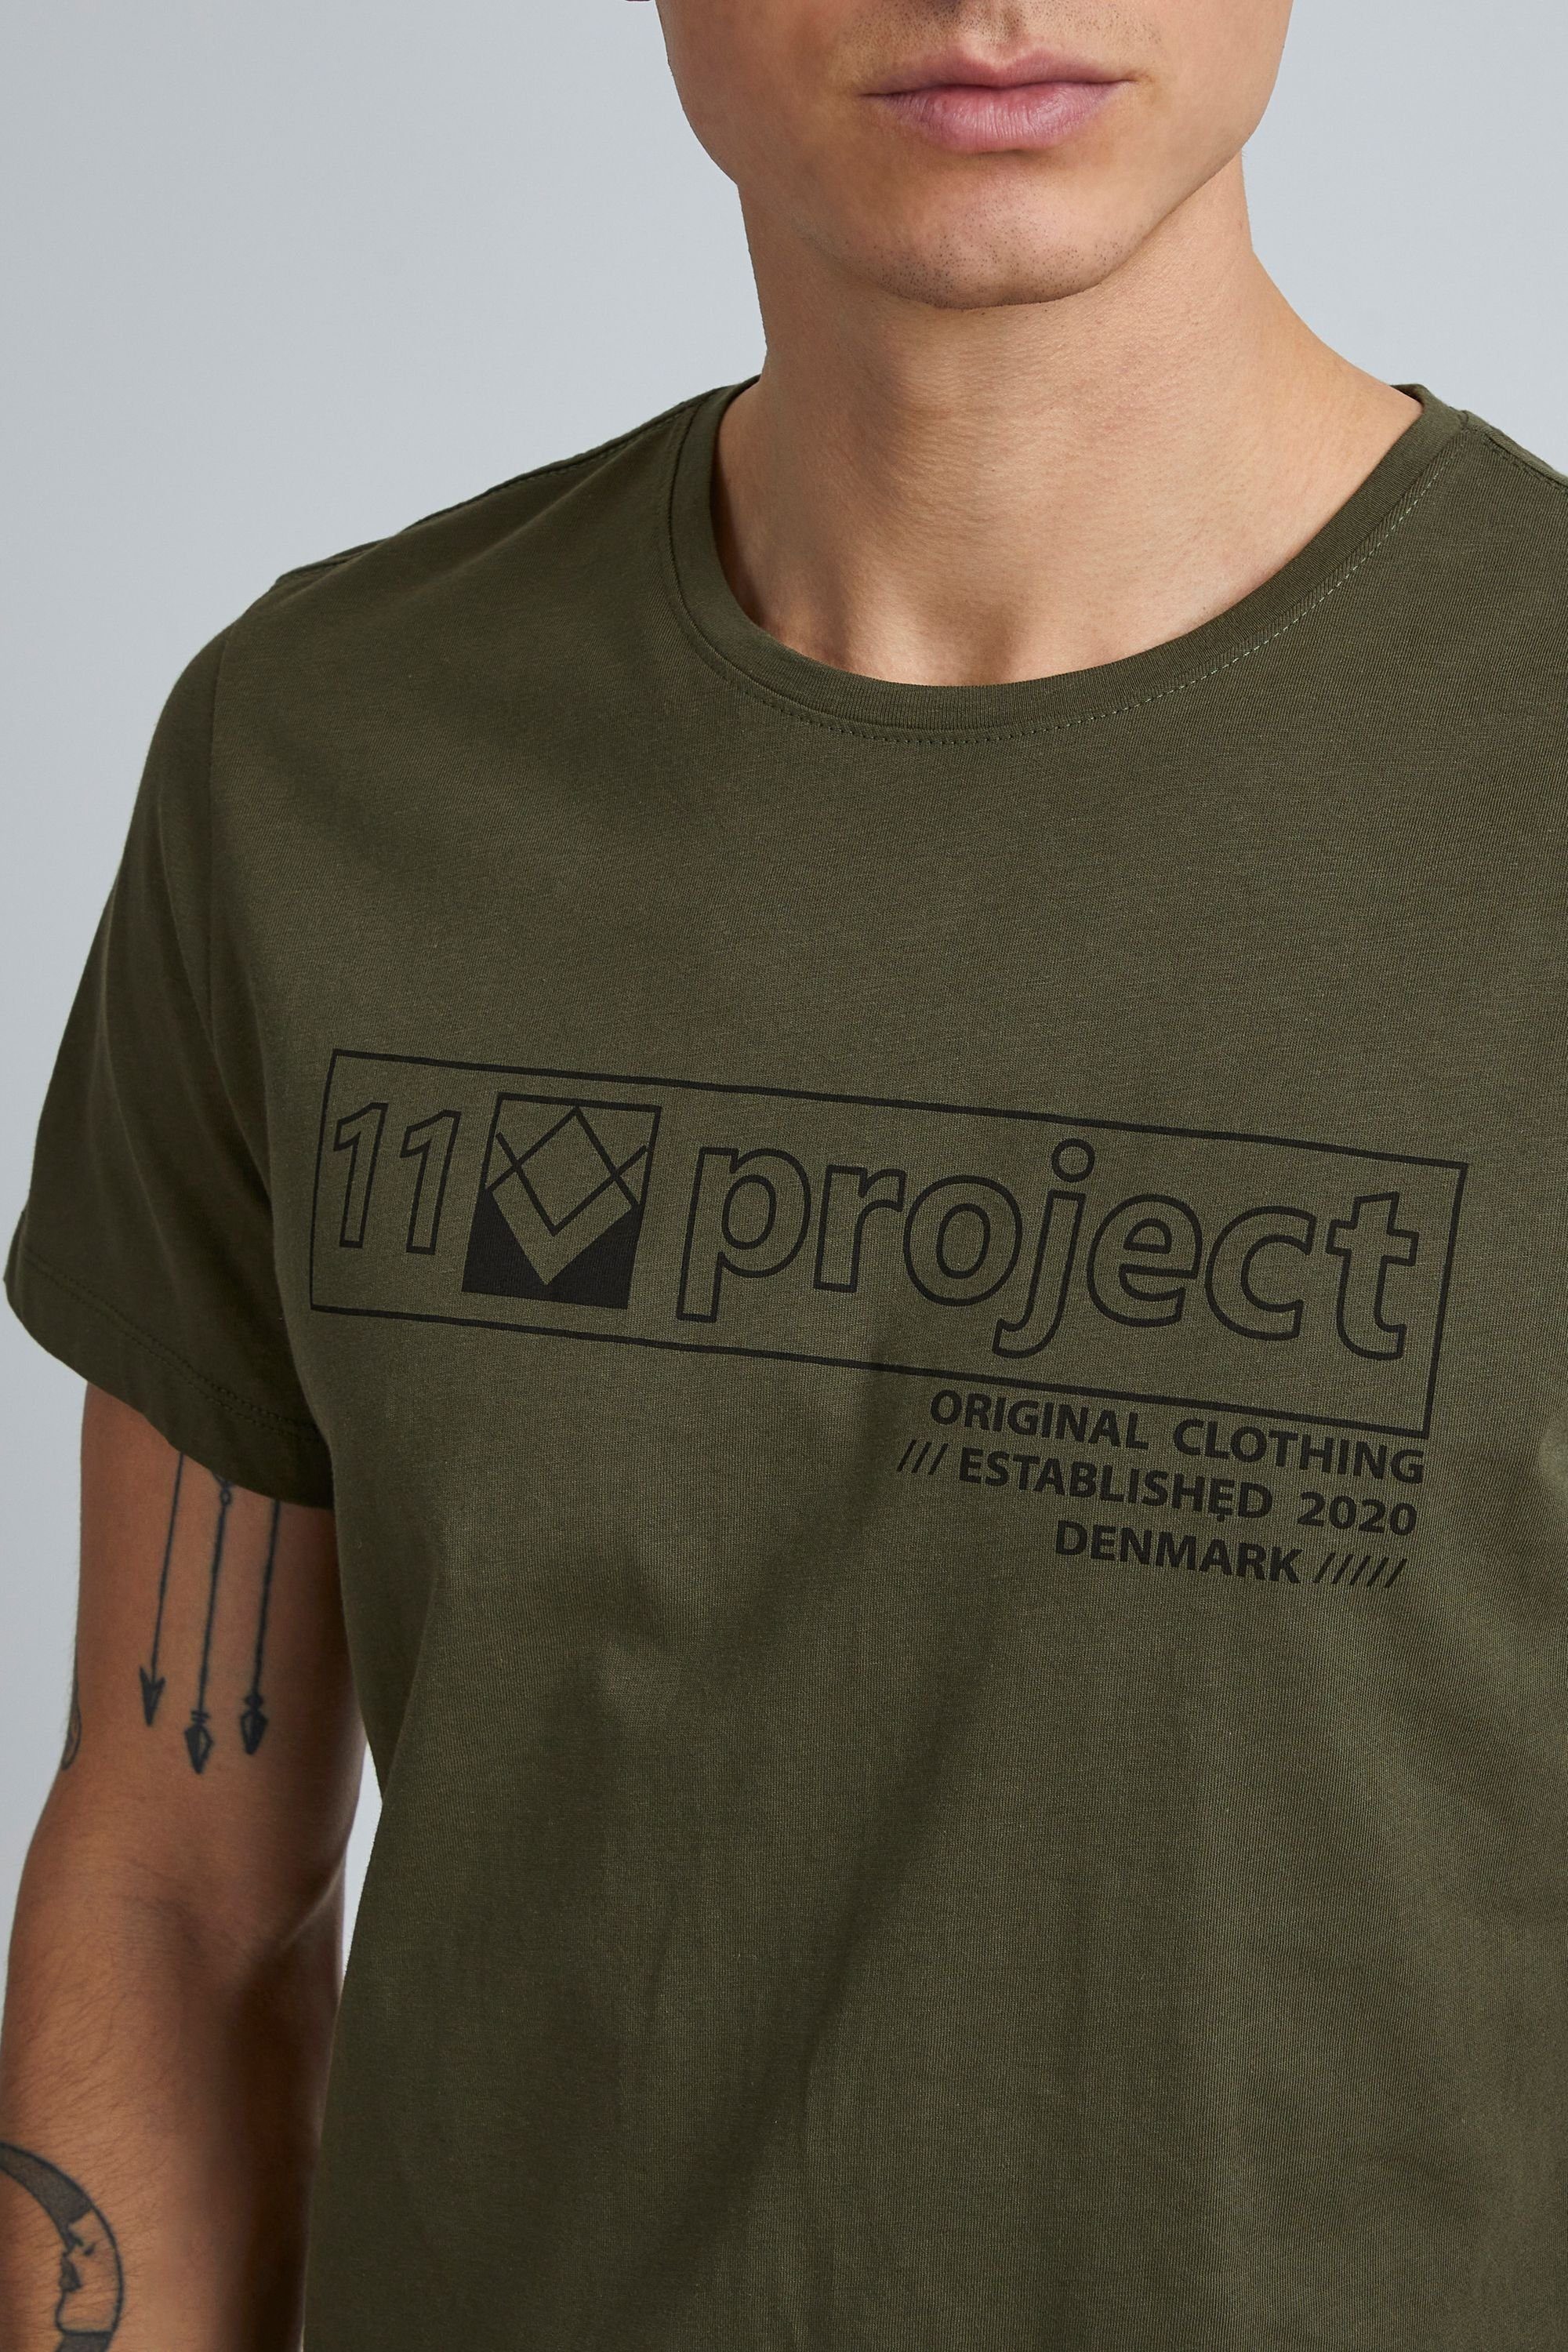 T-Shirt Project Night Project Olive 11 11 PRMattis